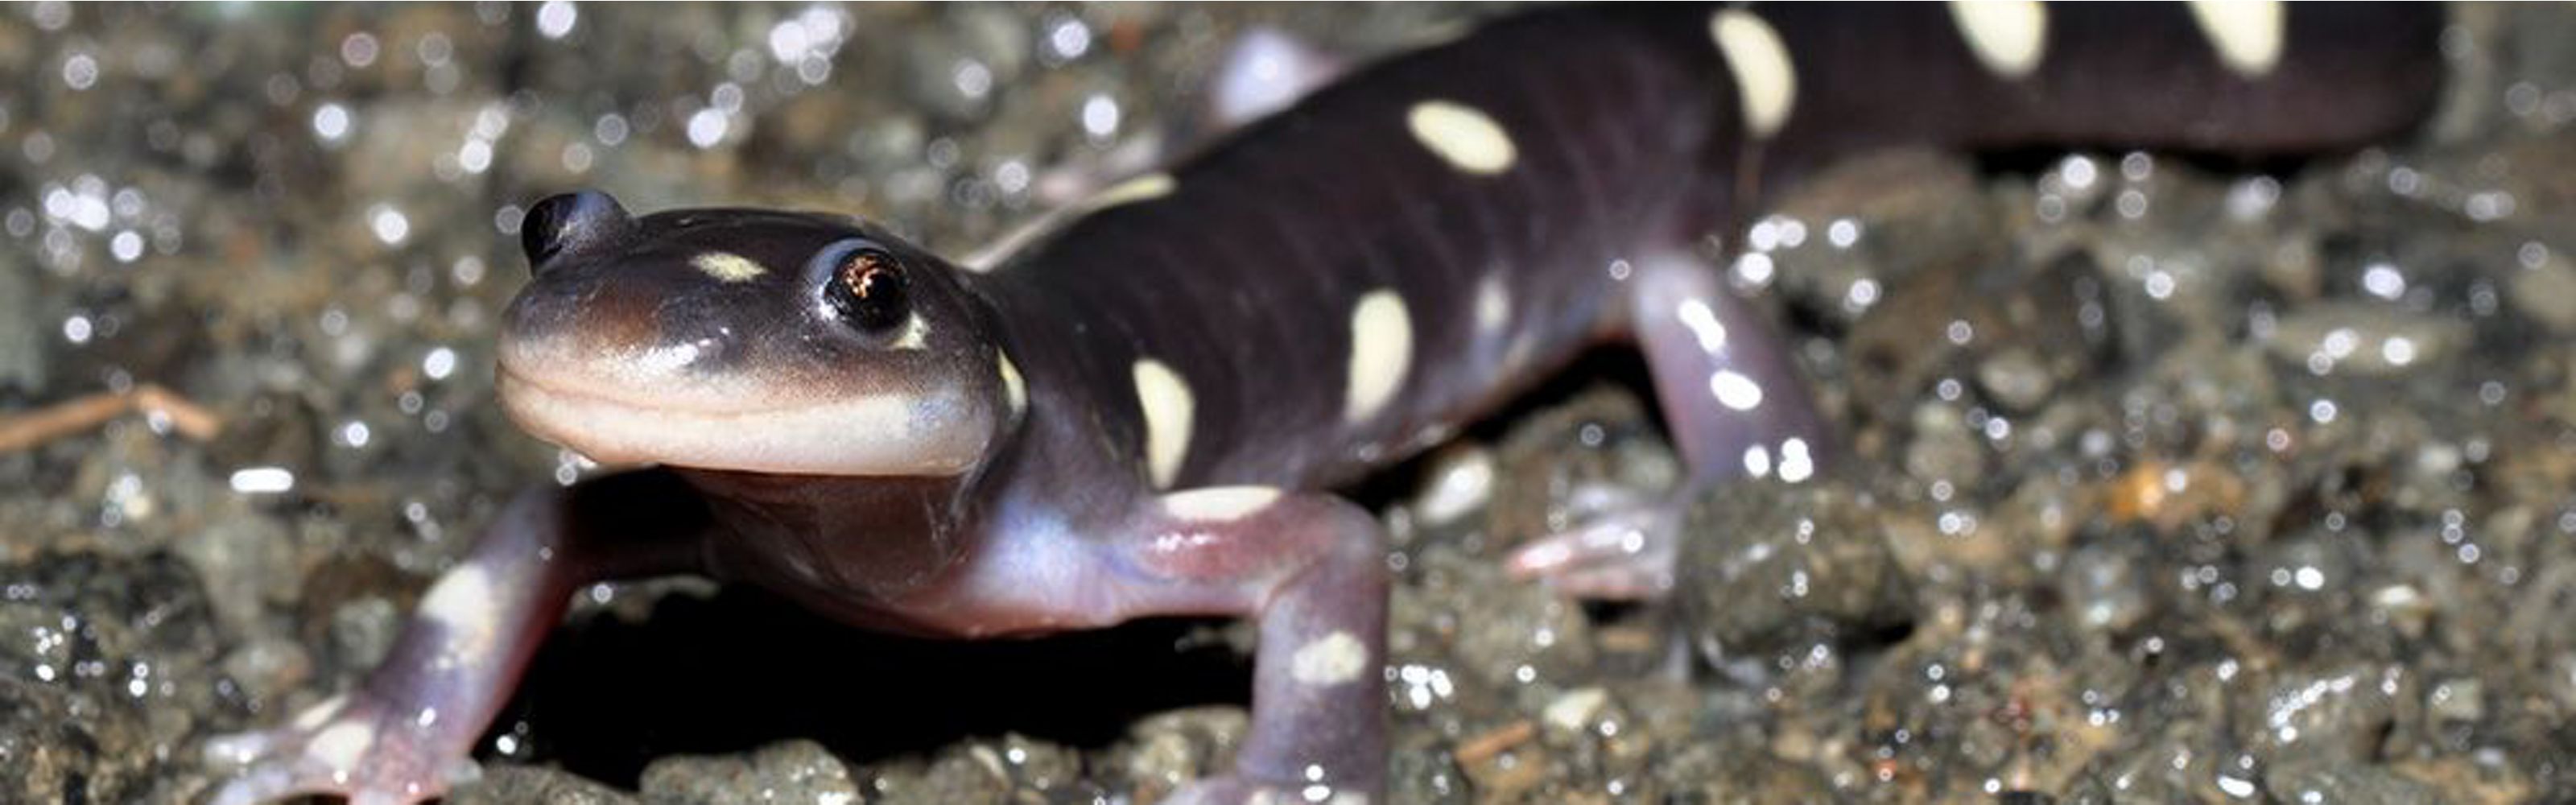 Close-up of a salamander.